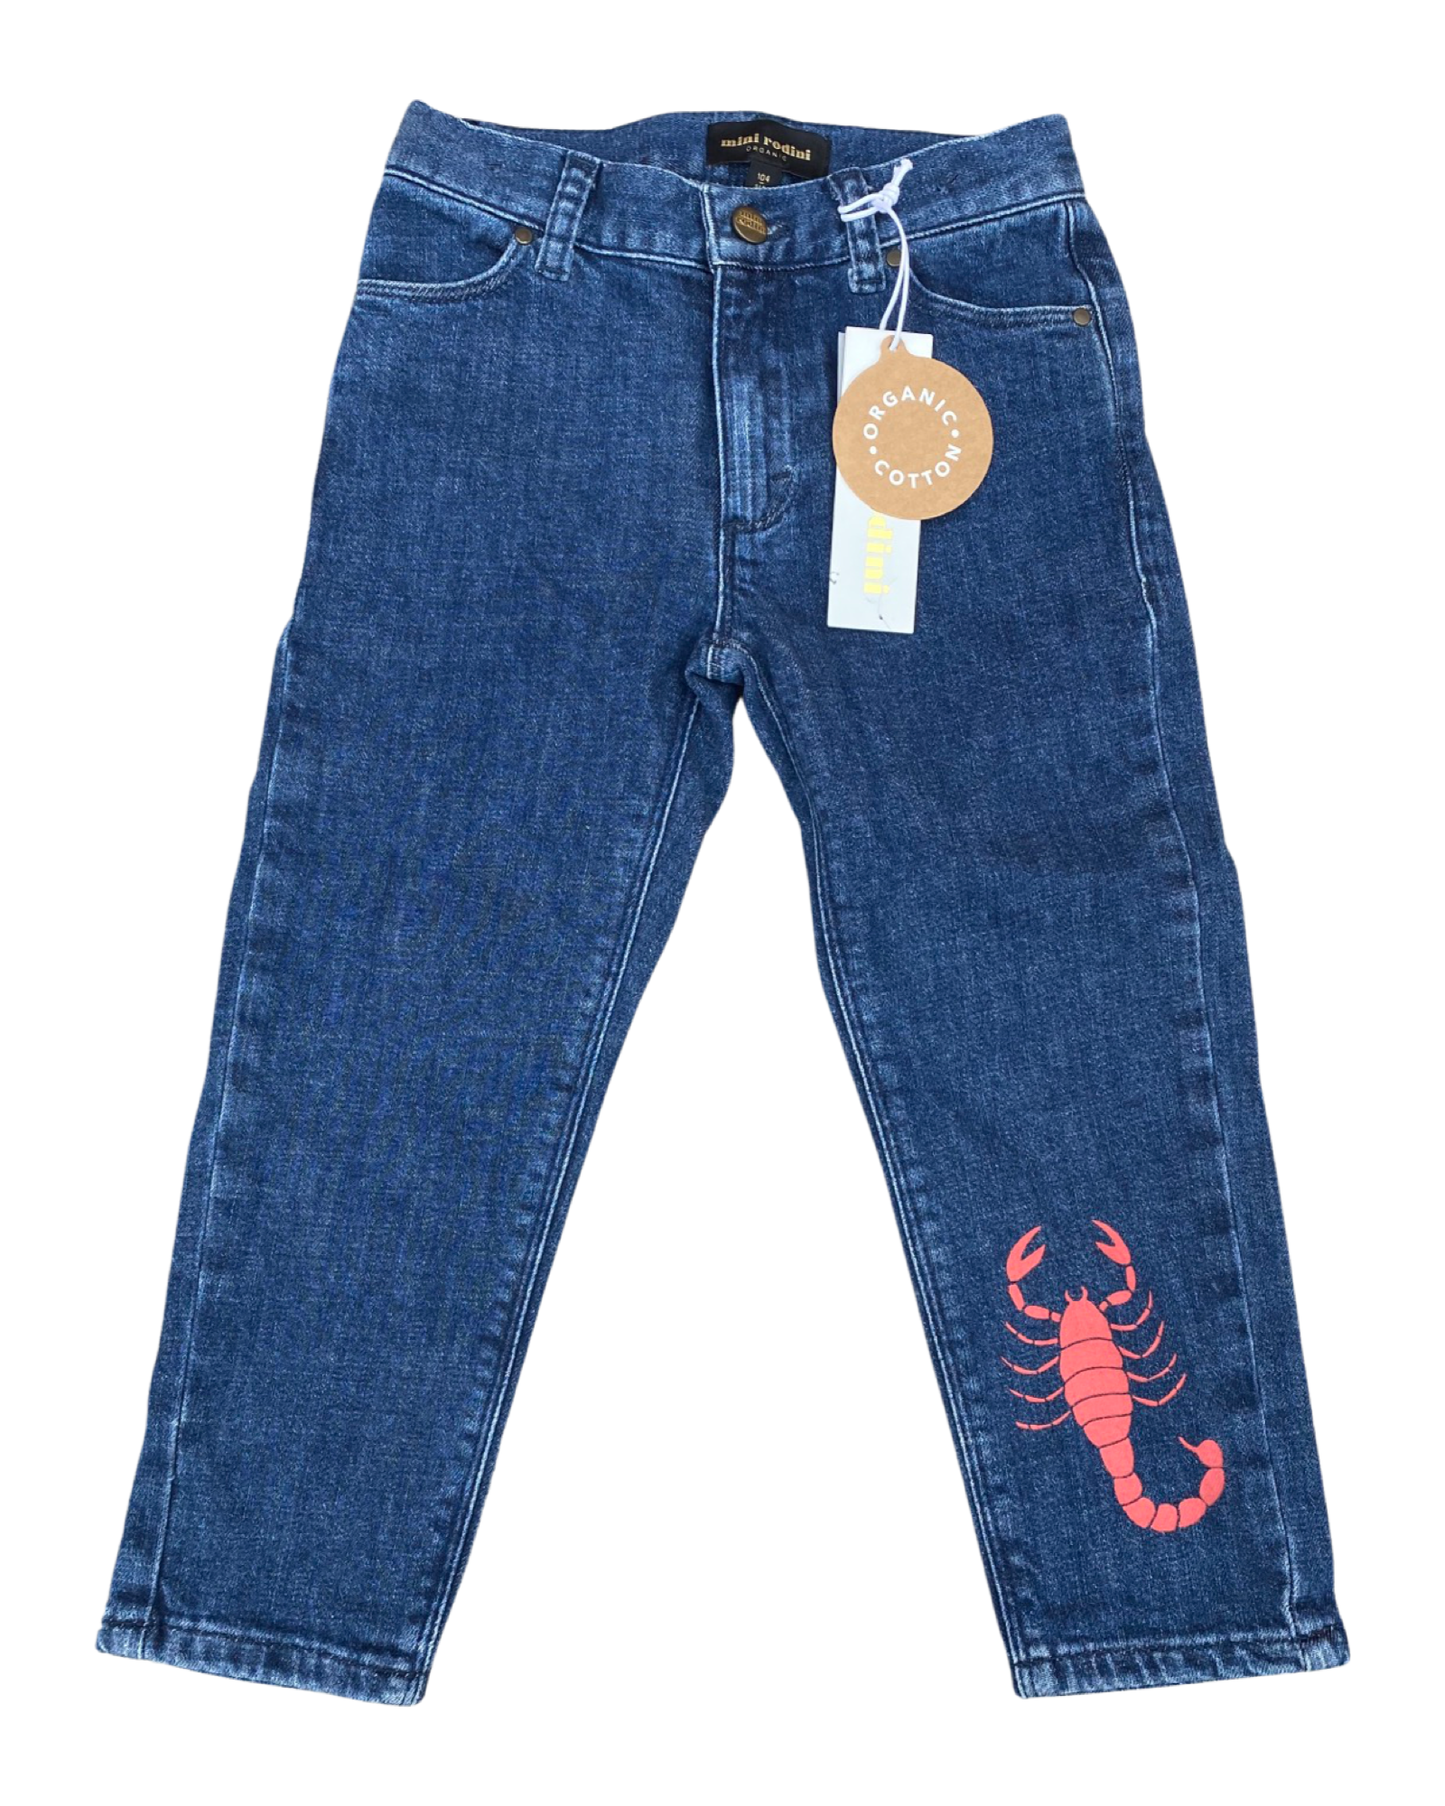 Mini Rodini scorpio denim jeans (3-5yrs)